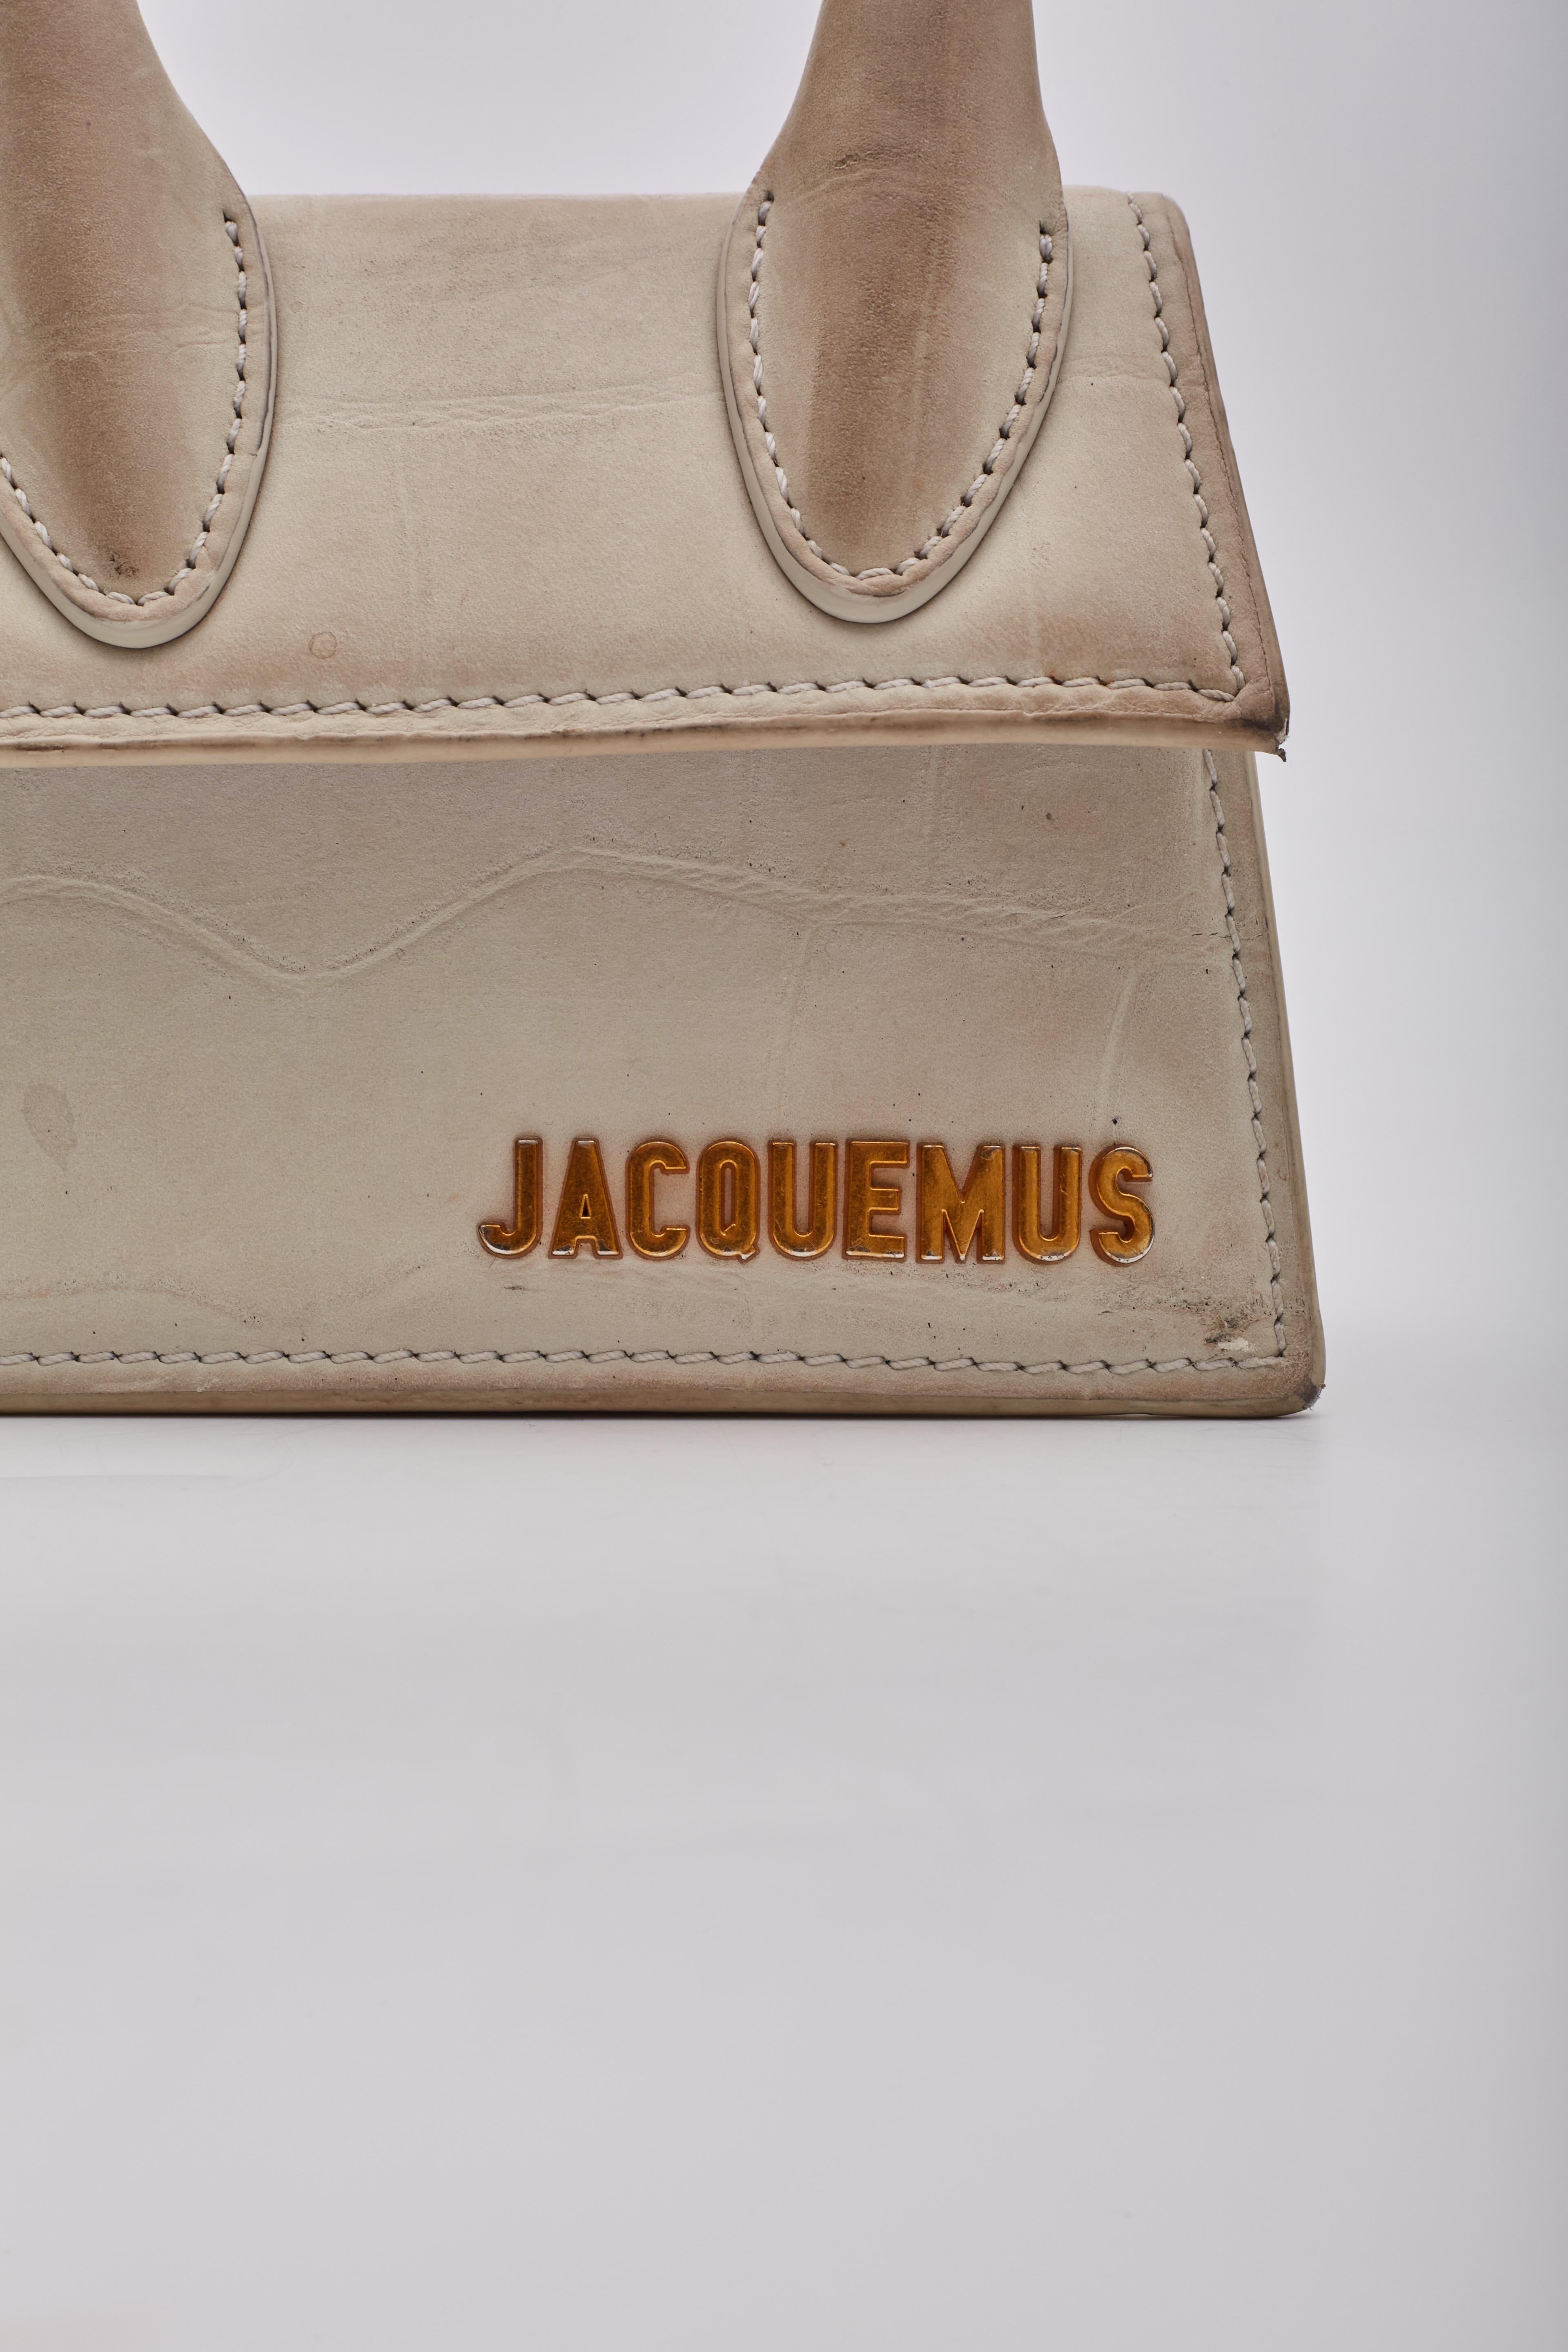 Jacquemus Off White Croc Mini Le Chiquito Clutch Bag For Sale 3